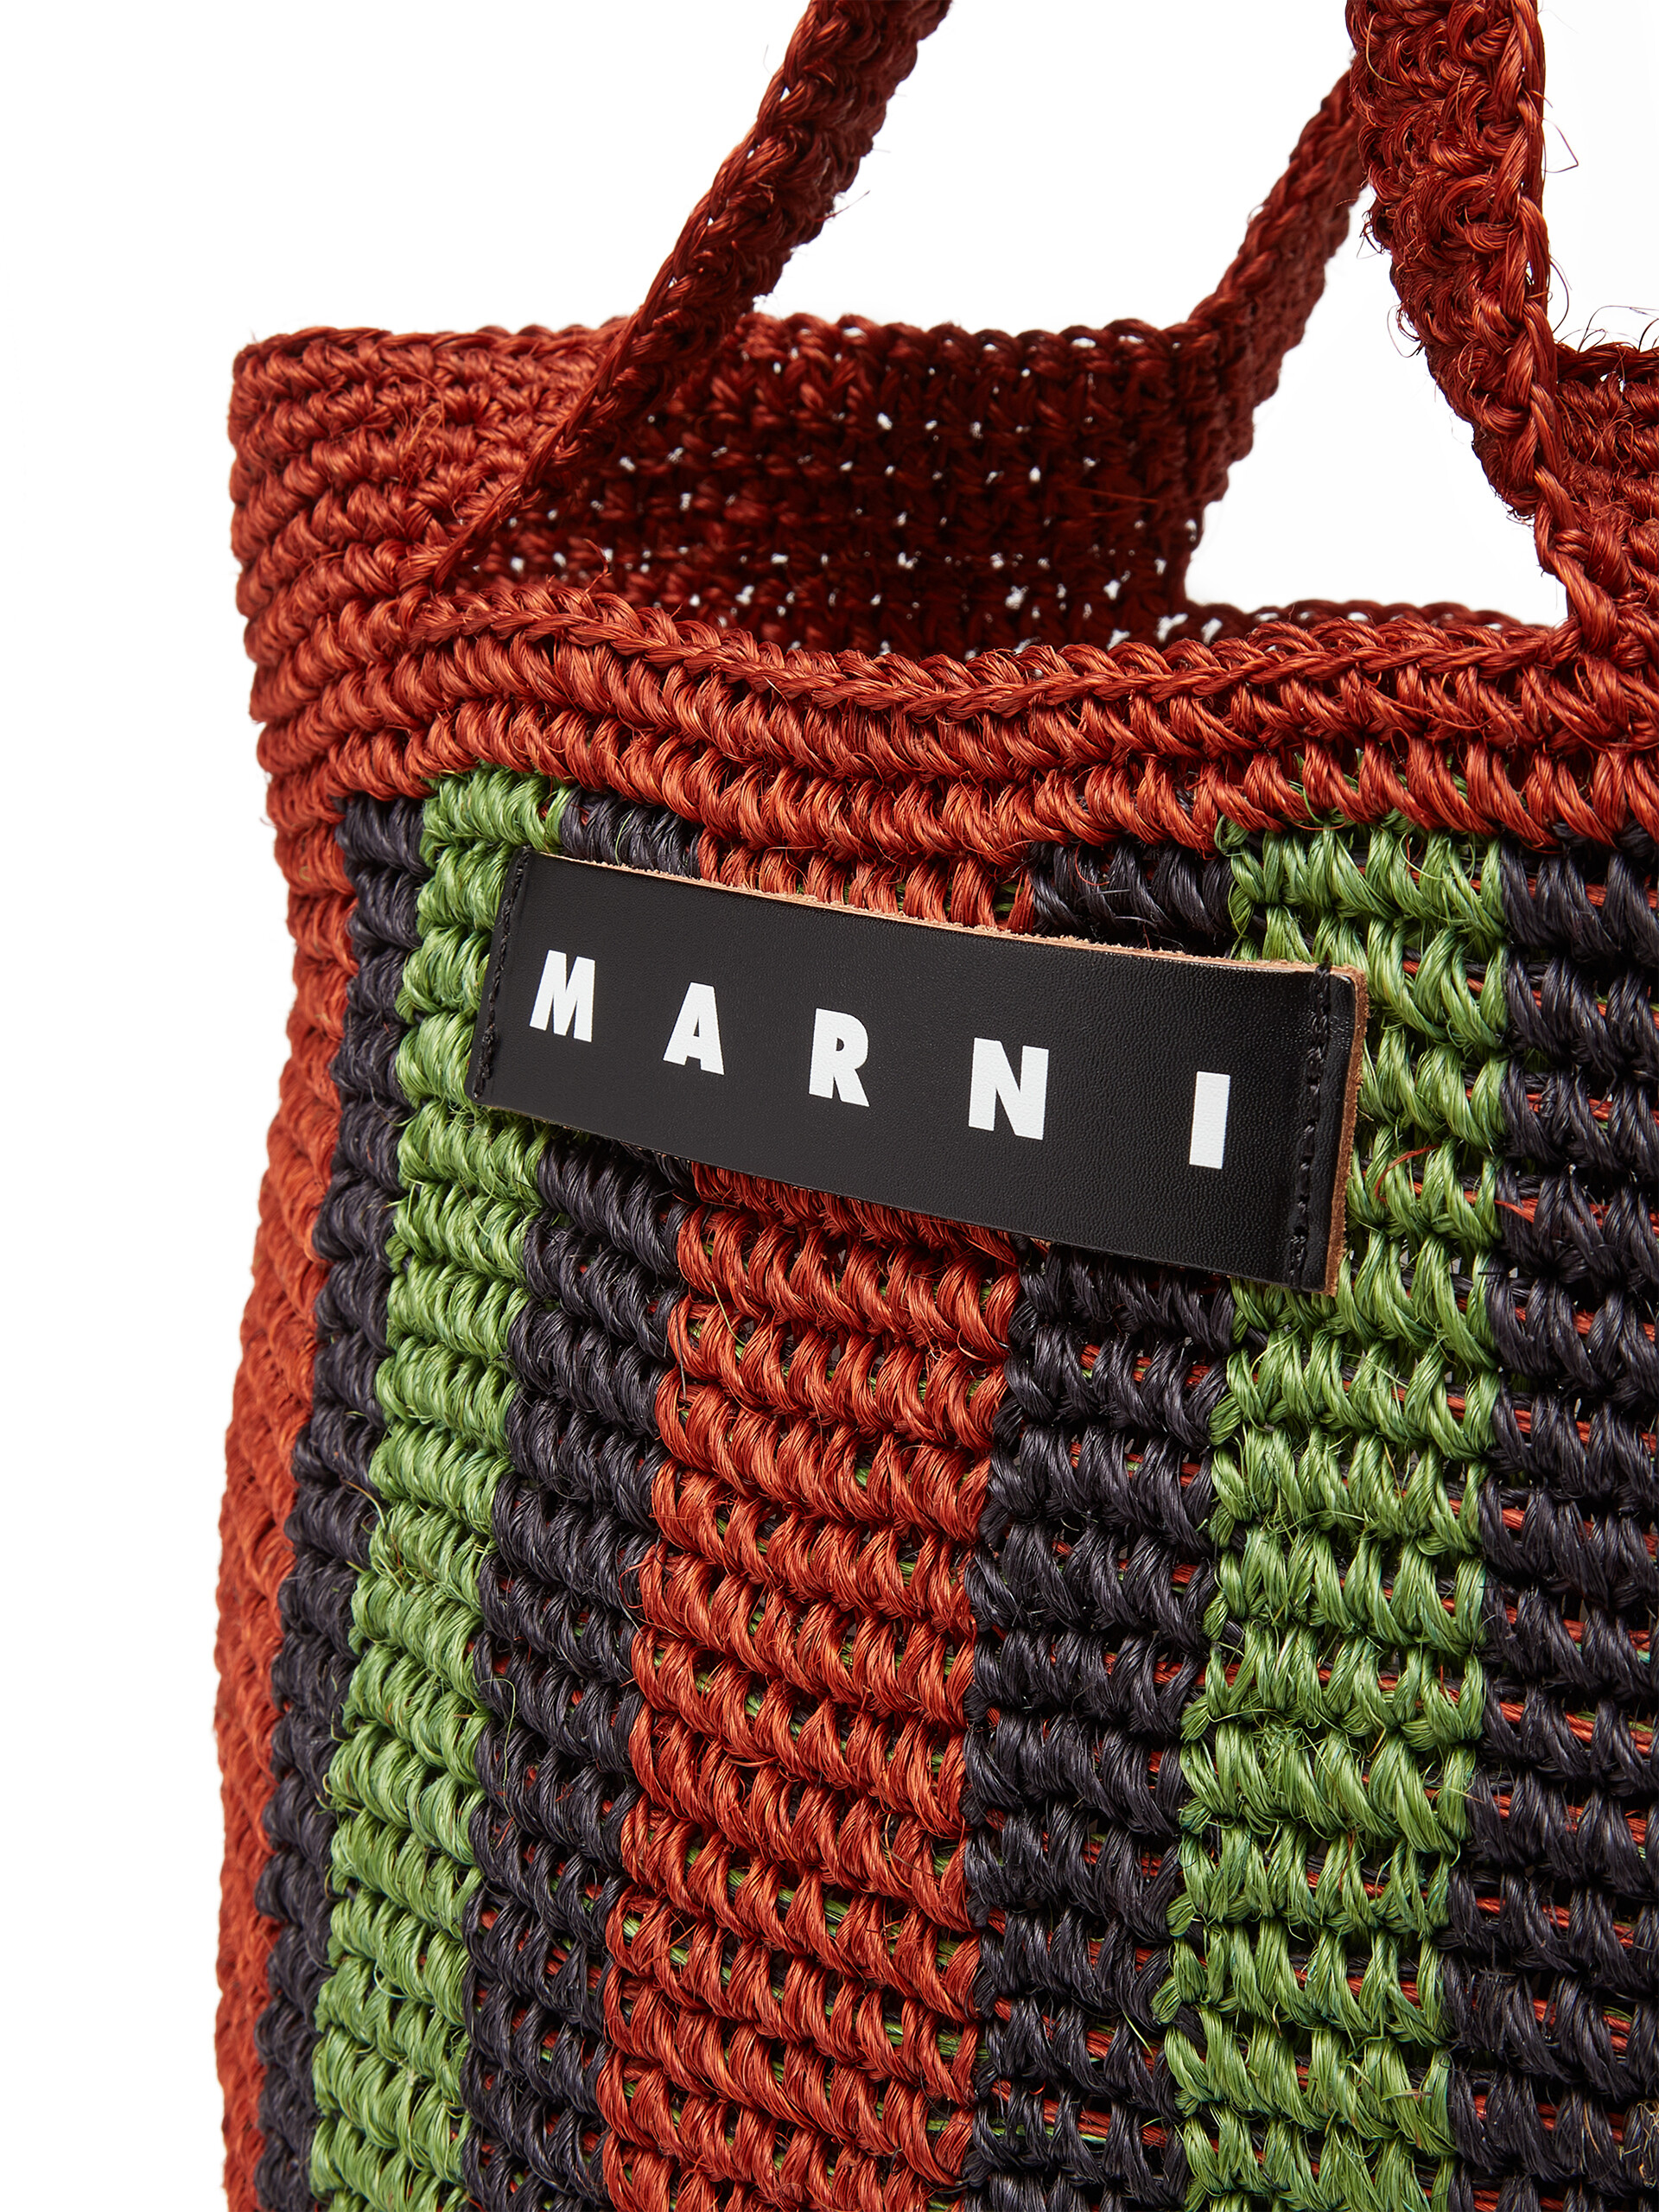 MARNI MARKET FIQUE bag in multicolor burnt brown natural fibre - Bags - Image 4